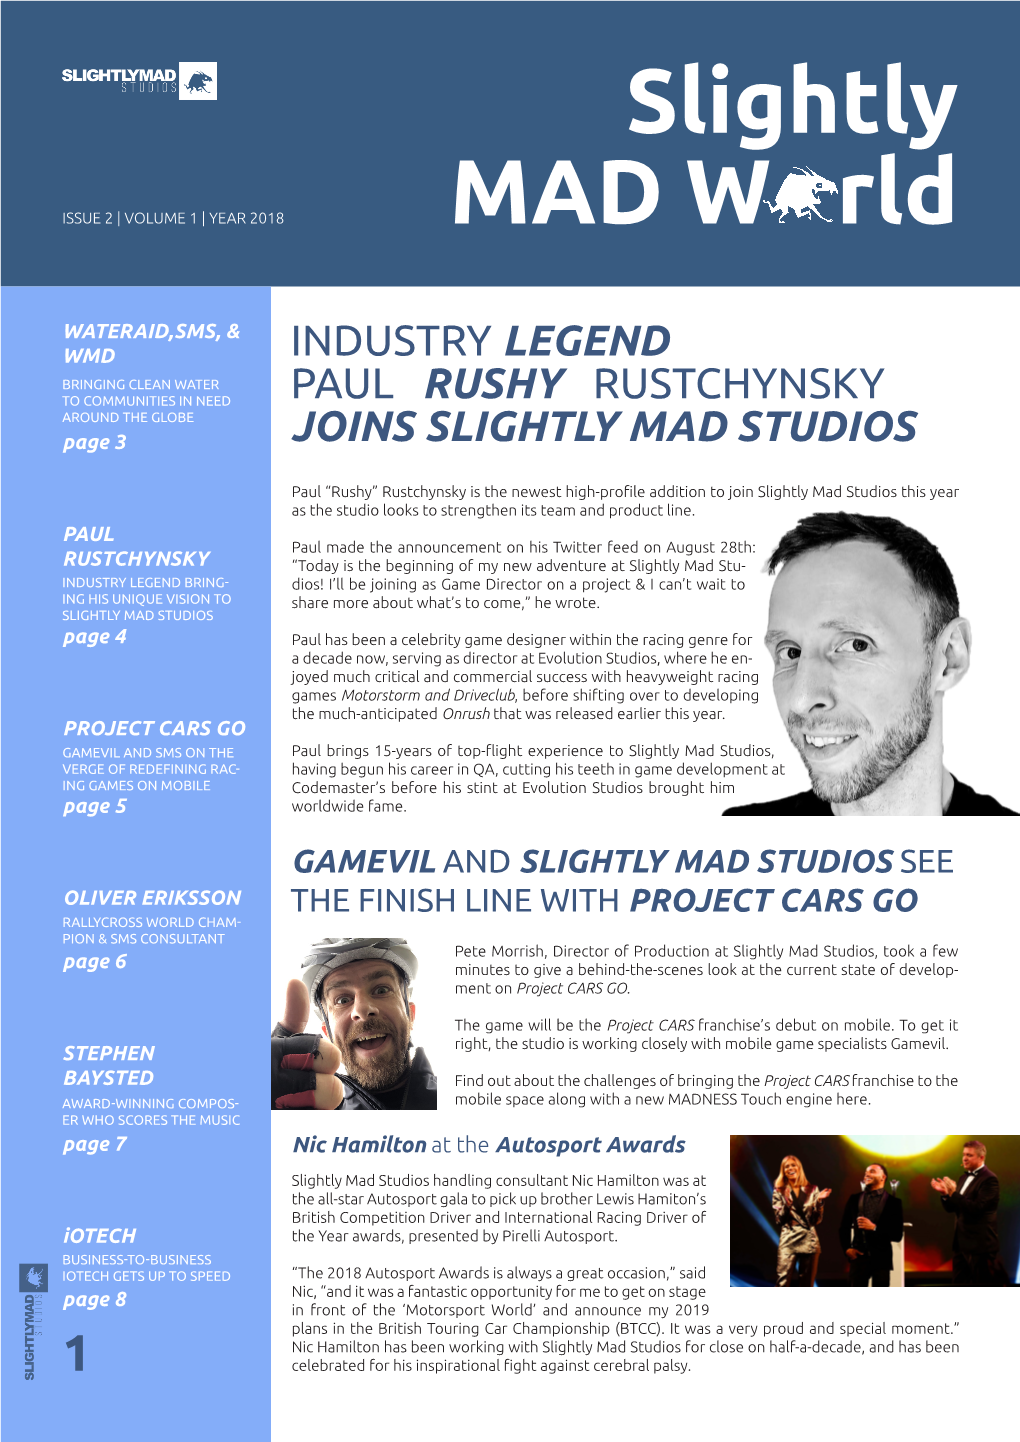 Industry Legend Paul “Rushy” Rustchynsky Joins Slightly Mad Studios